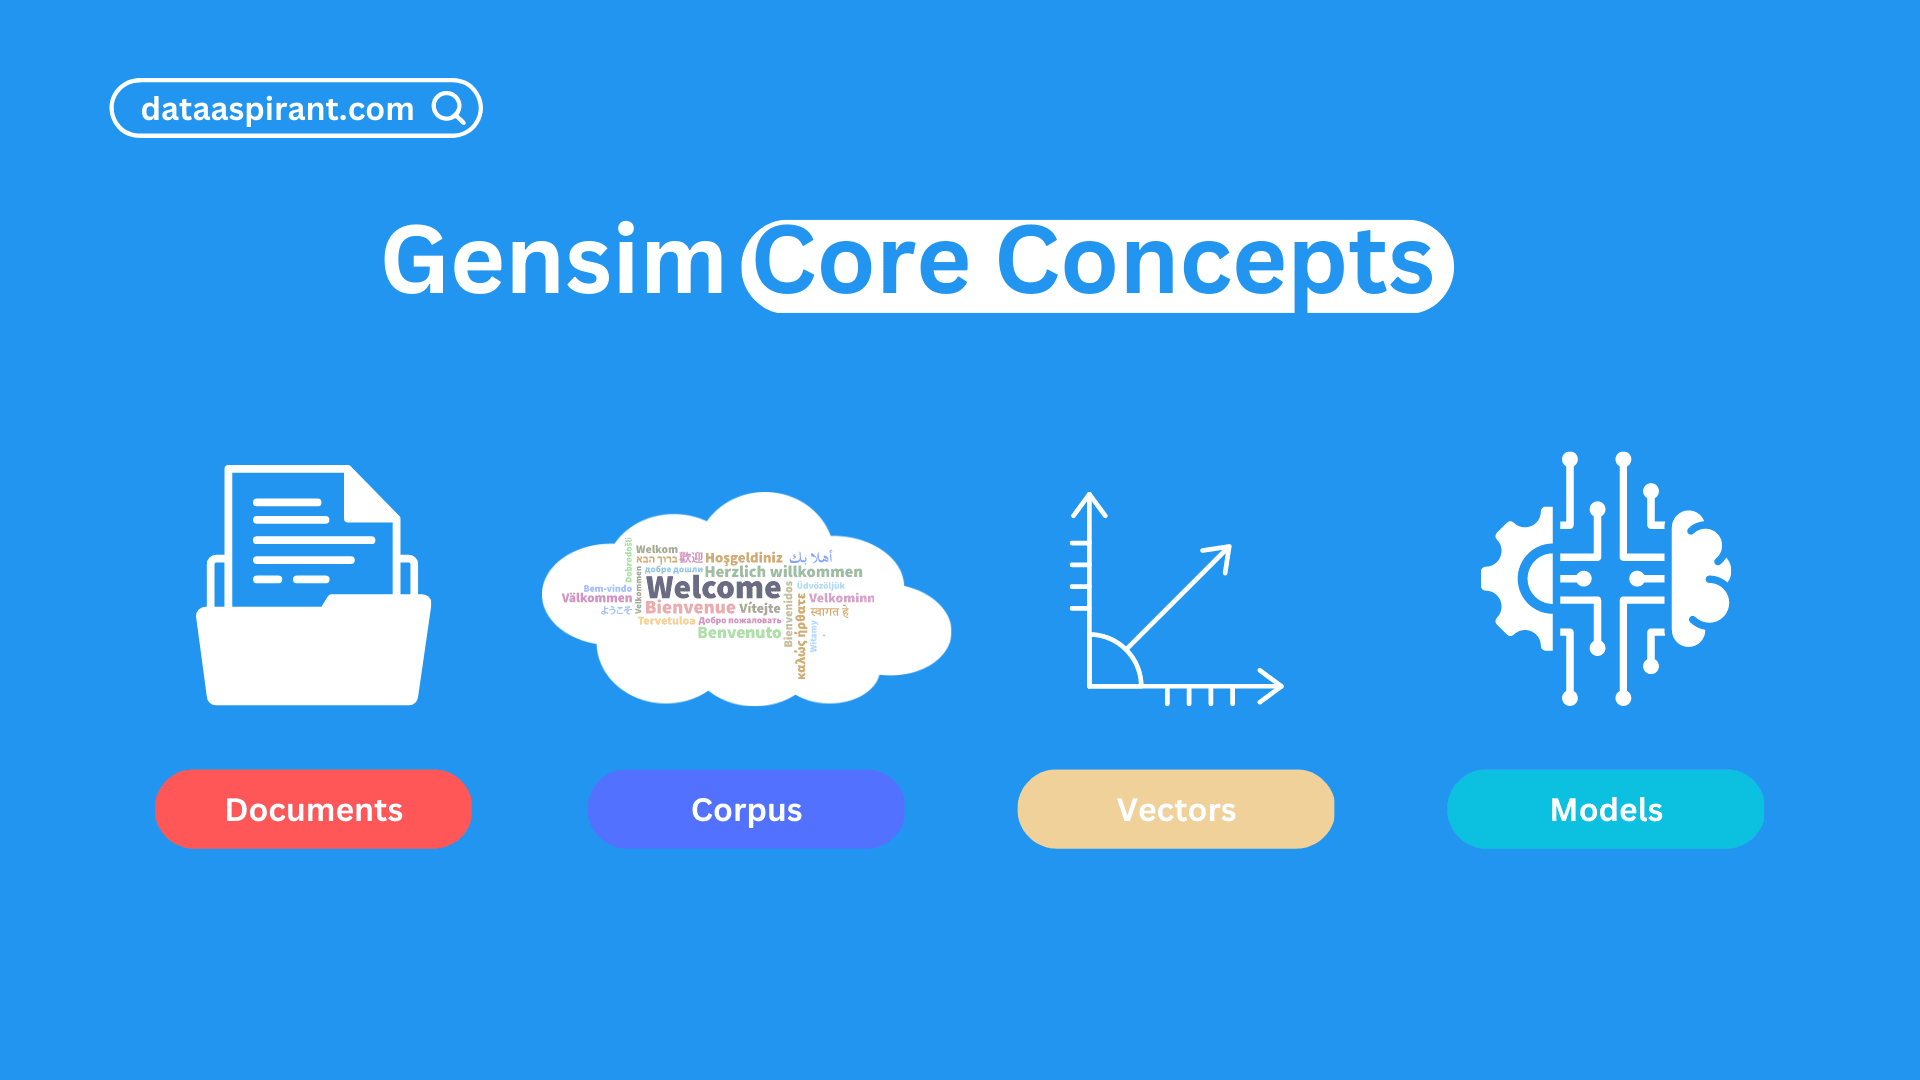 Gensim Core Concepts